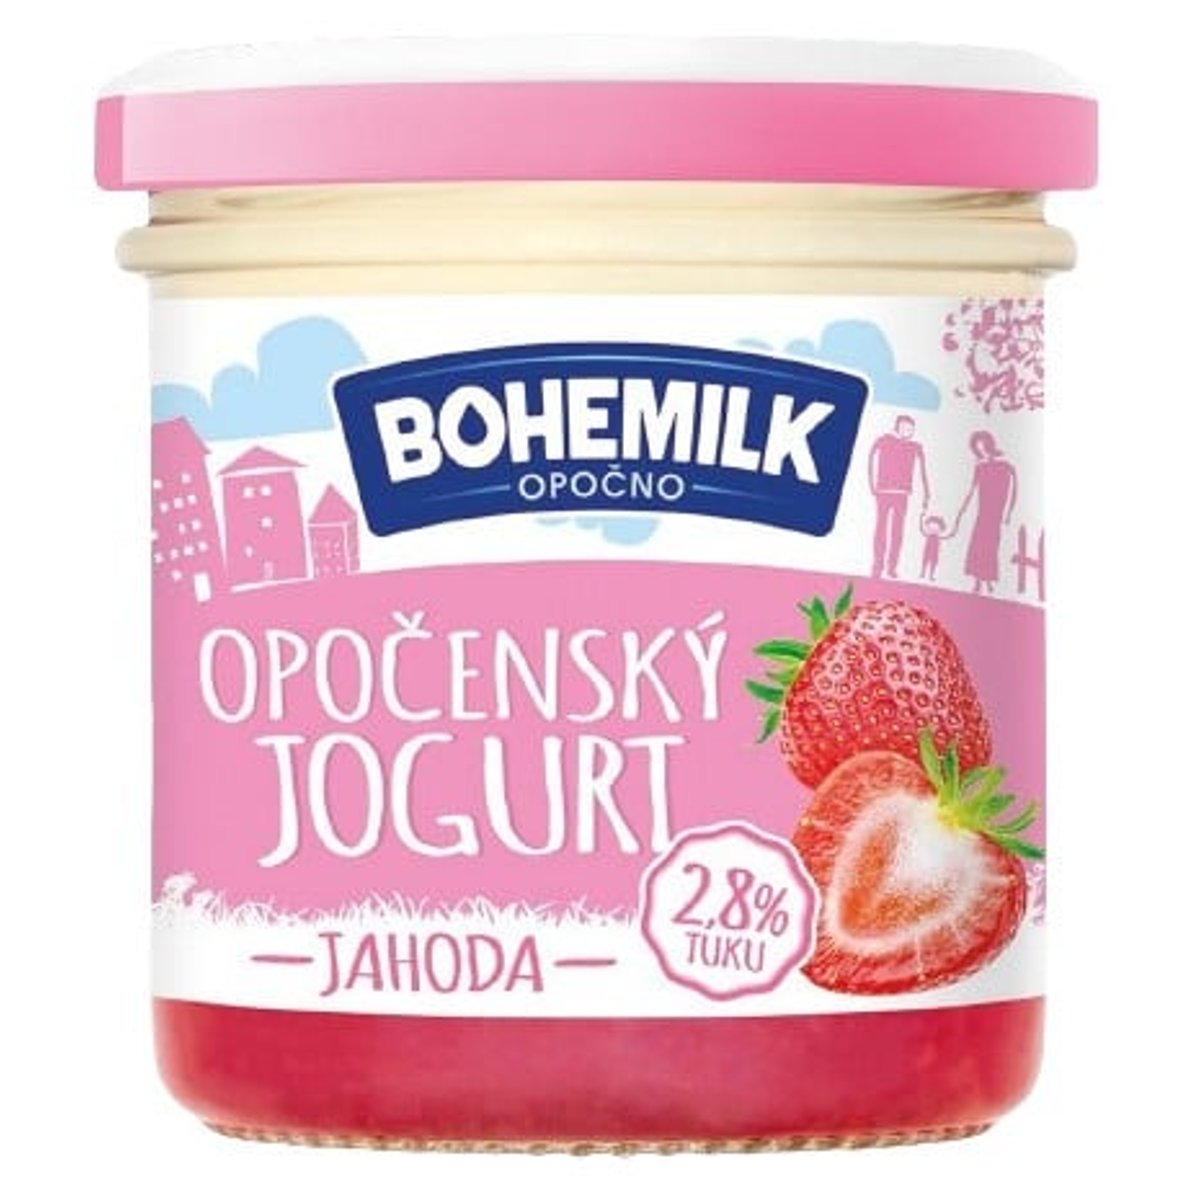 Bohemilk Opočenský jogurt ve skle jahoda